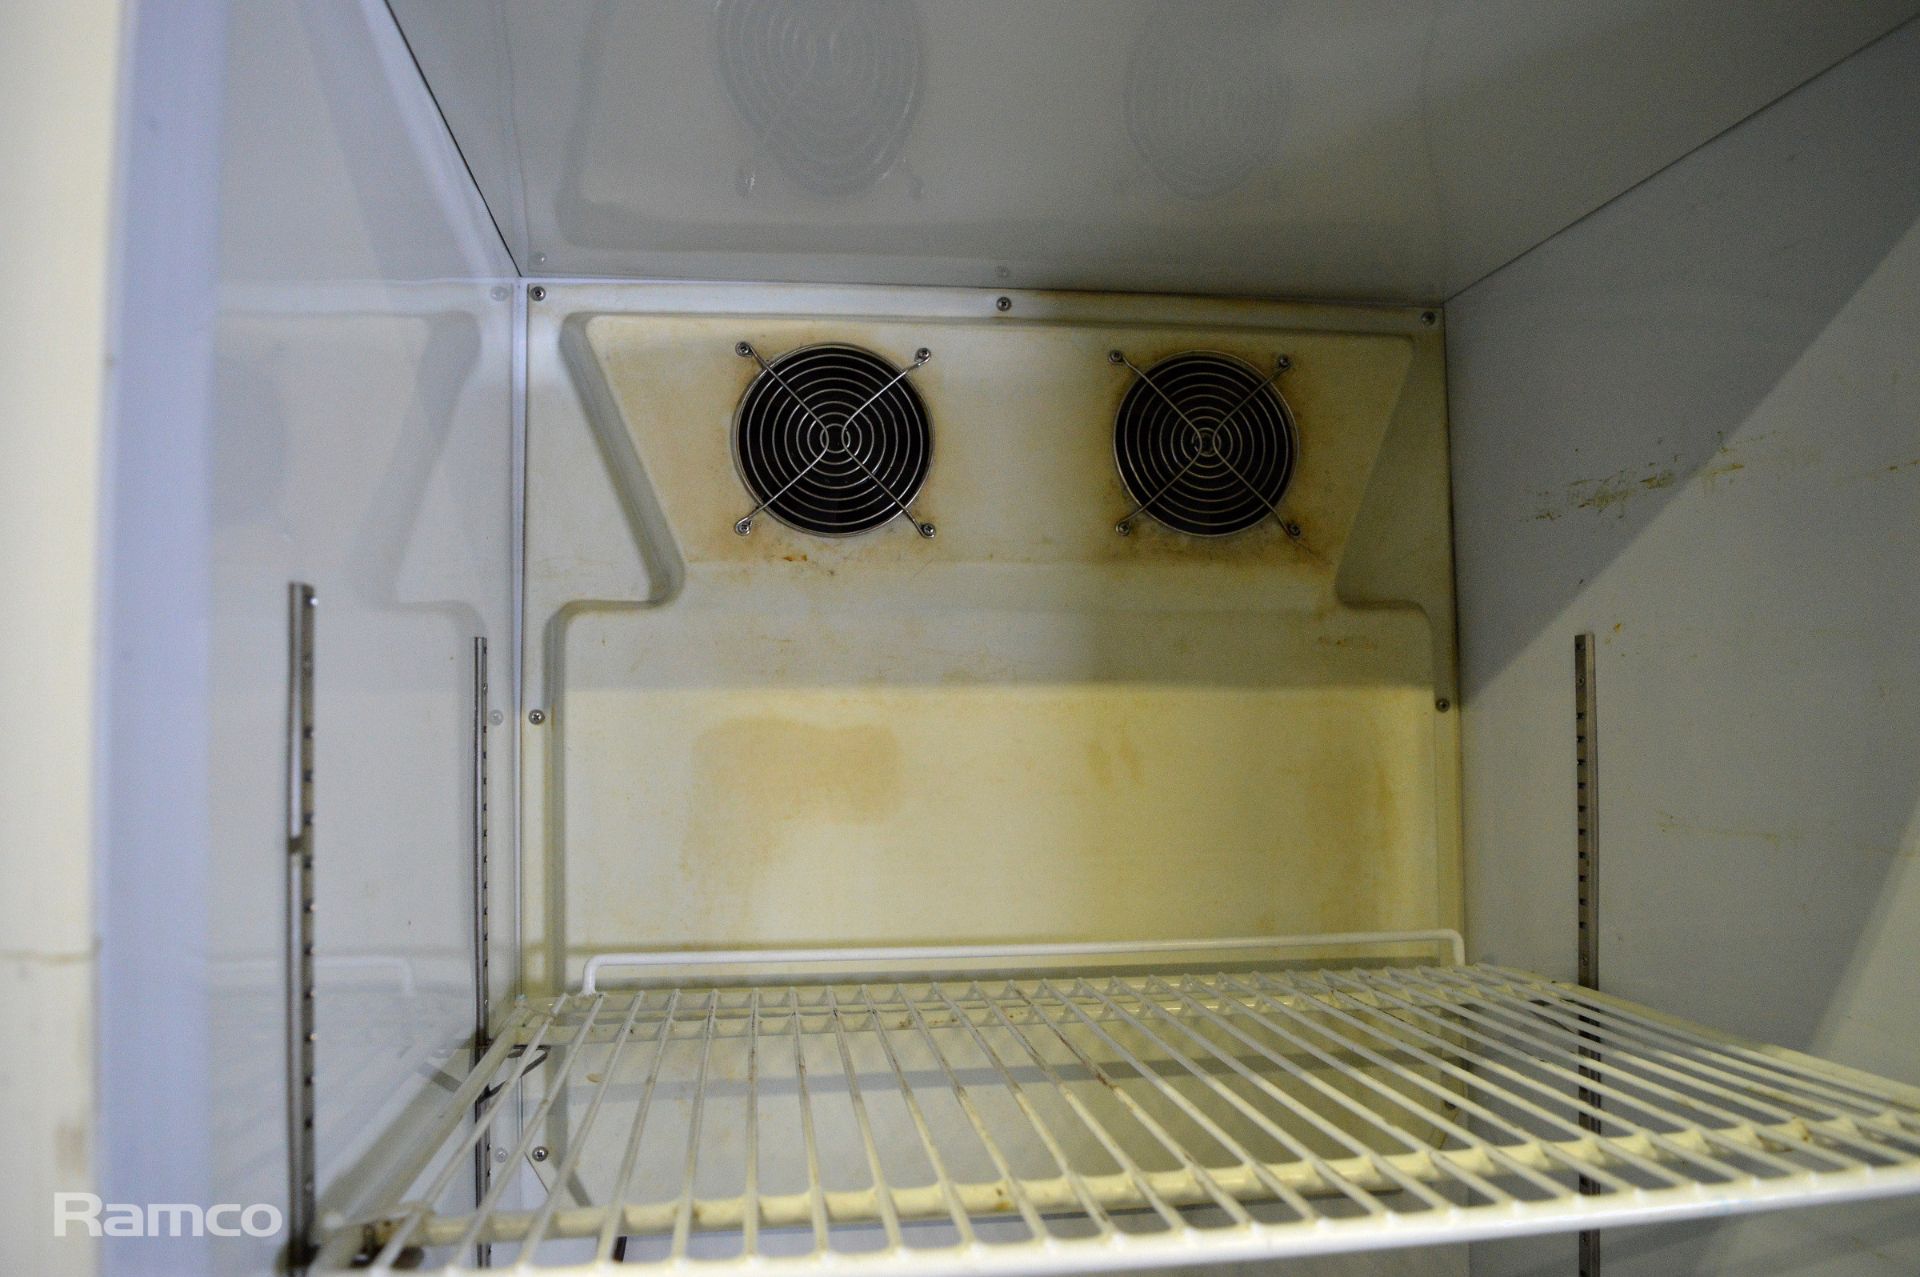 Refrigerator - L500/WC - 220V - 50Hz - W700 x D730 x H1800mm - Image 4 of 5